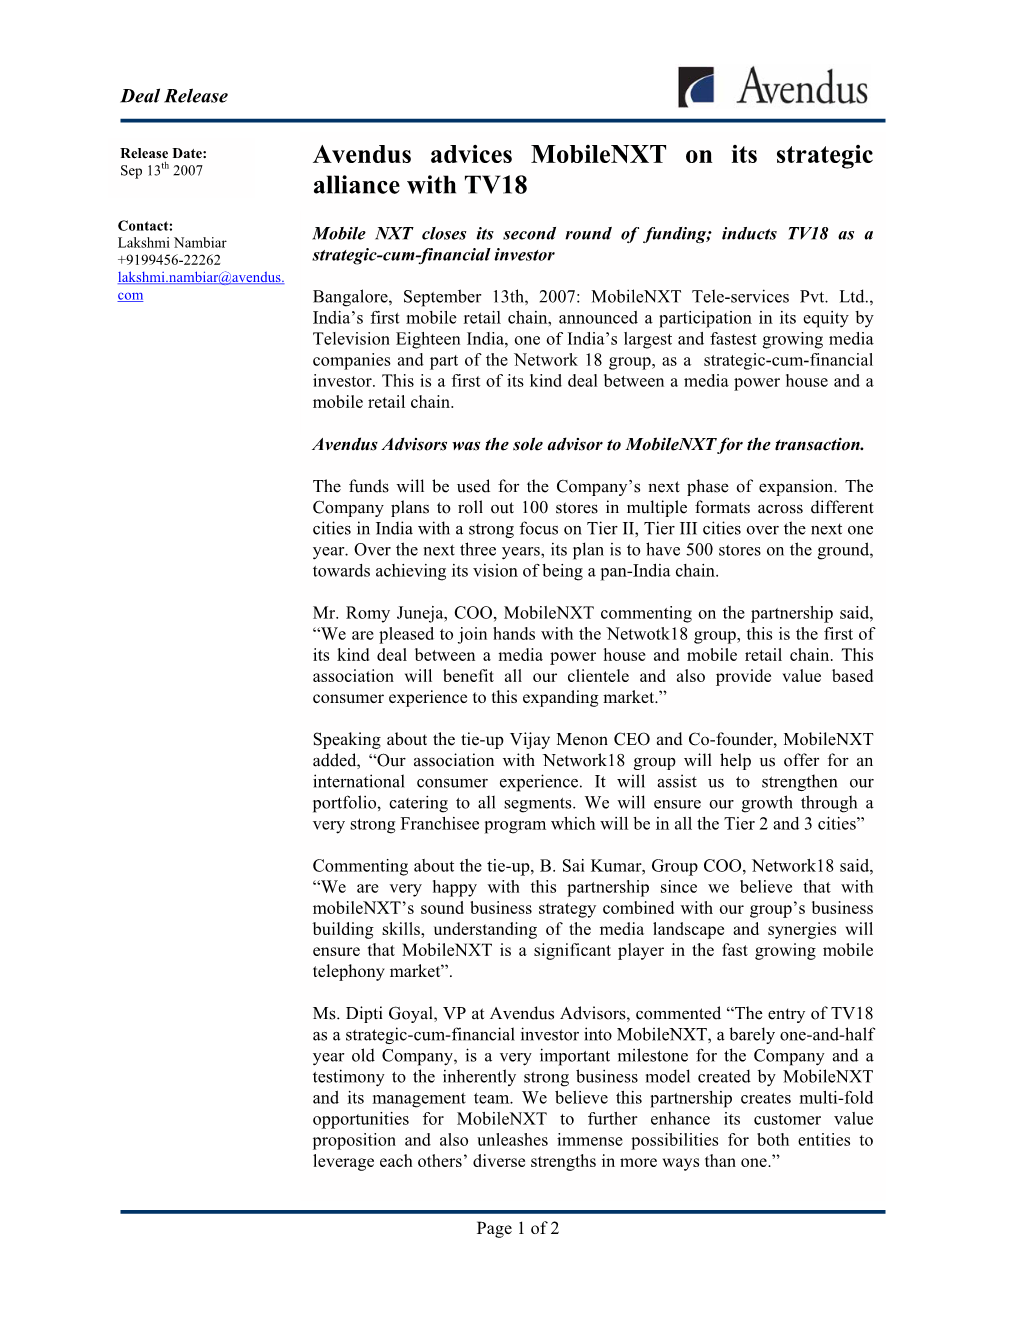 Avendus Advices Mobilenxt on Its Strategic Alliance with TV18